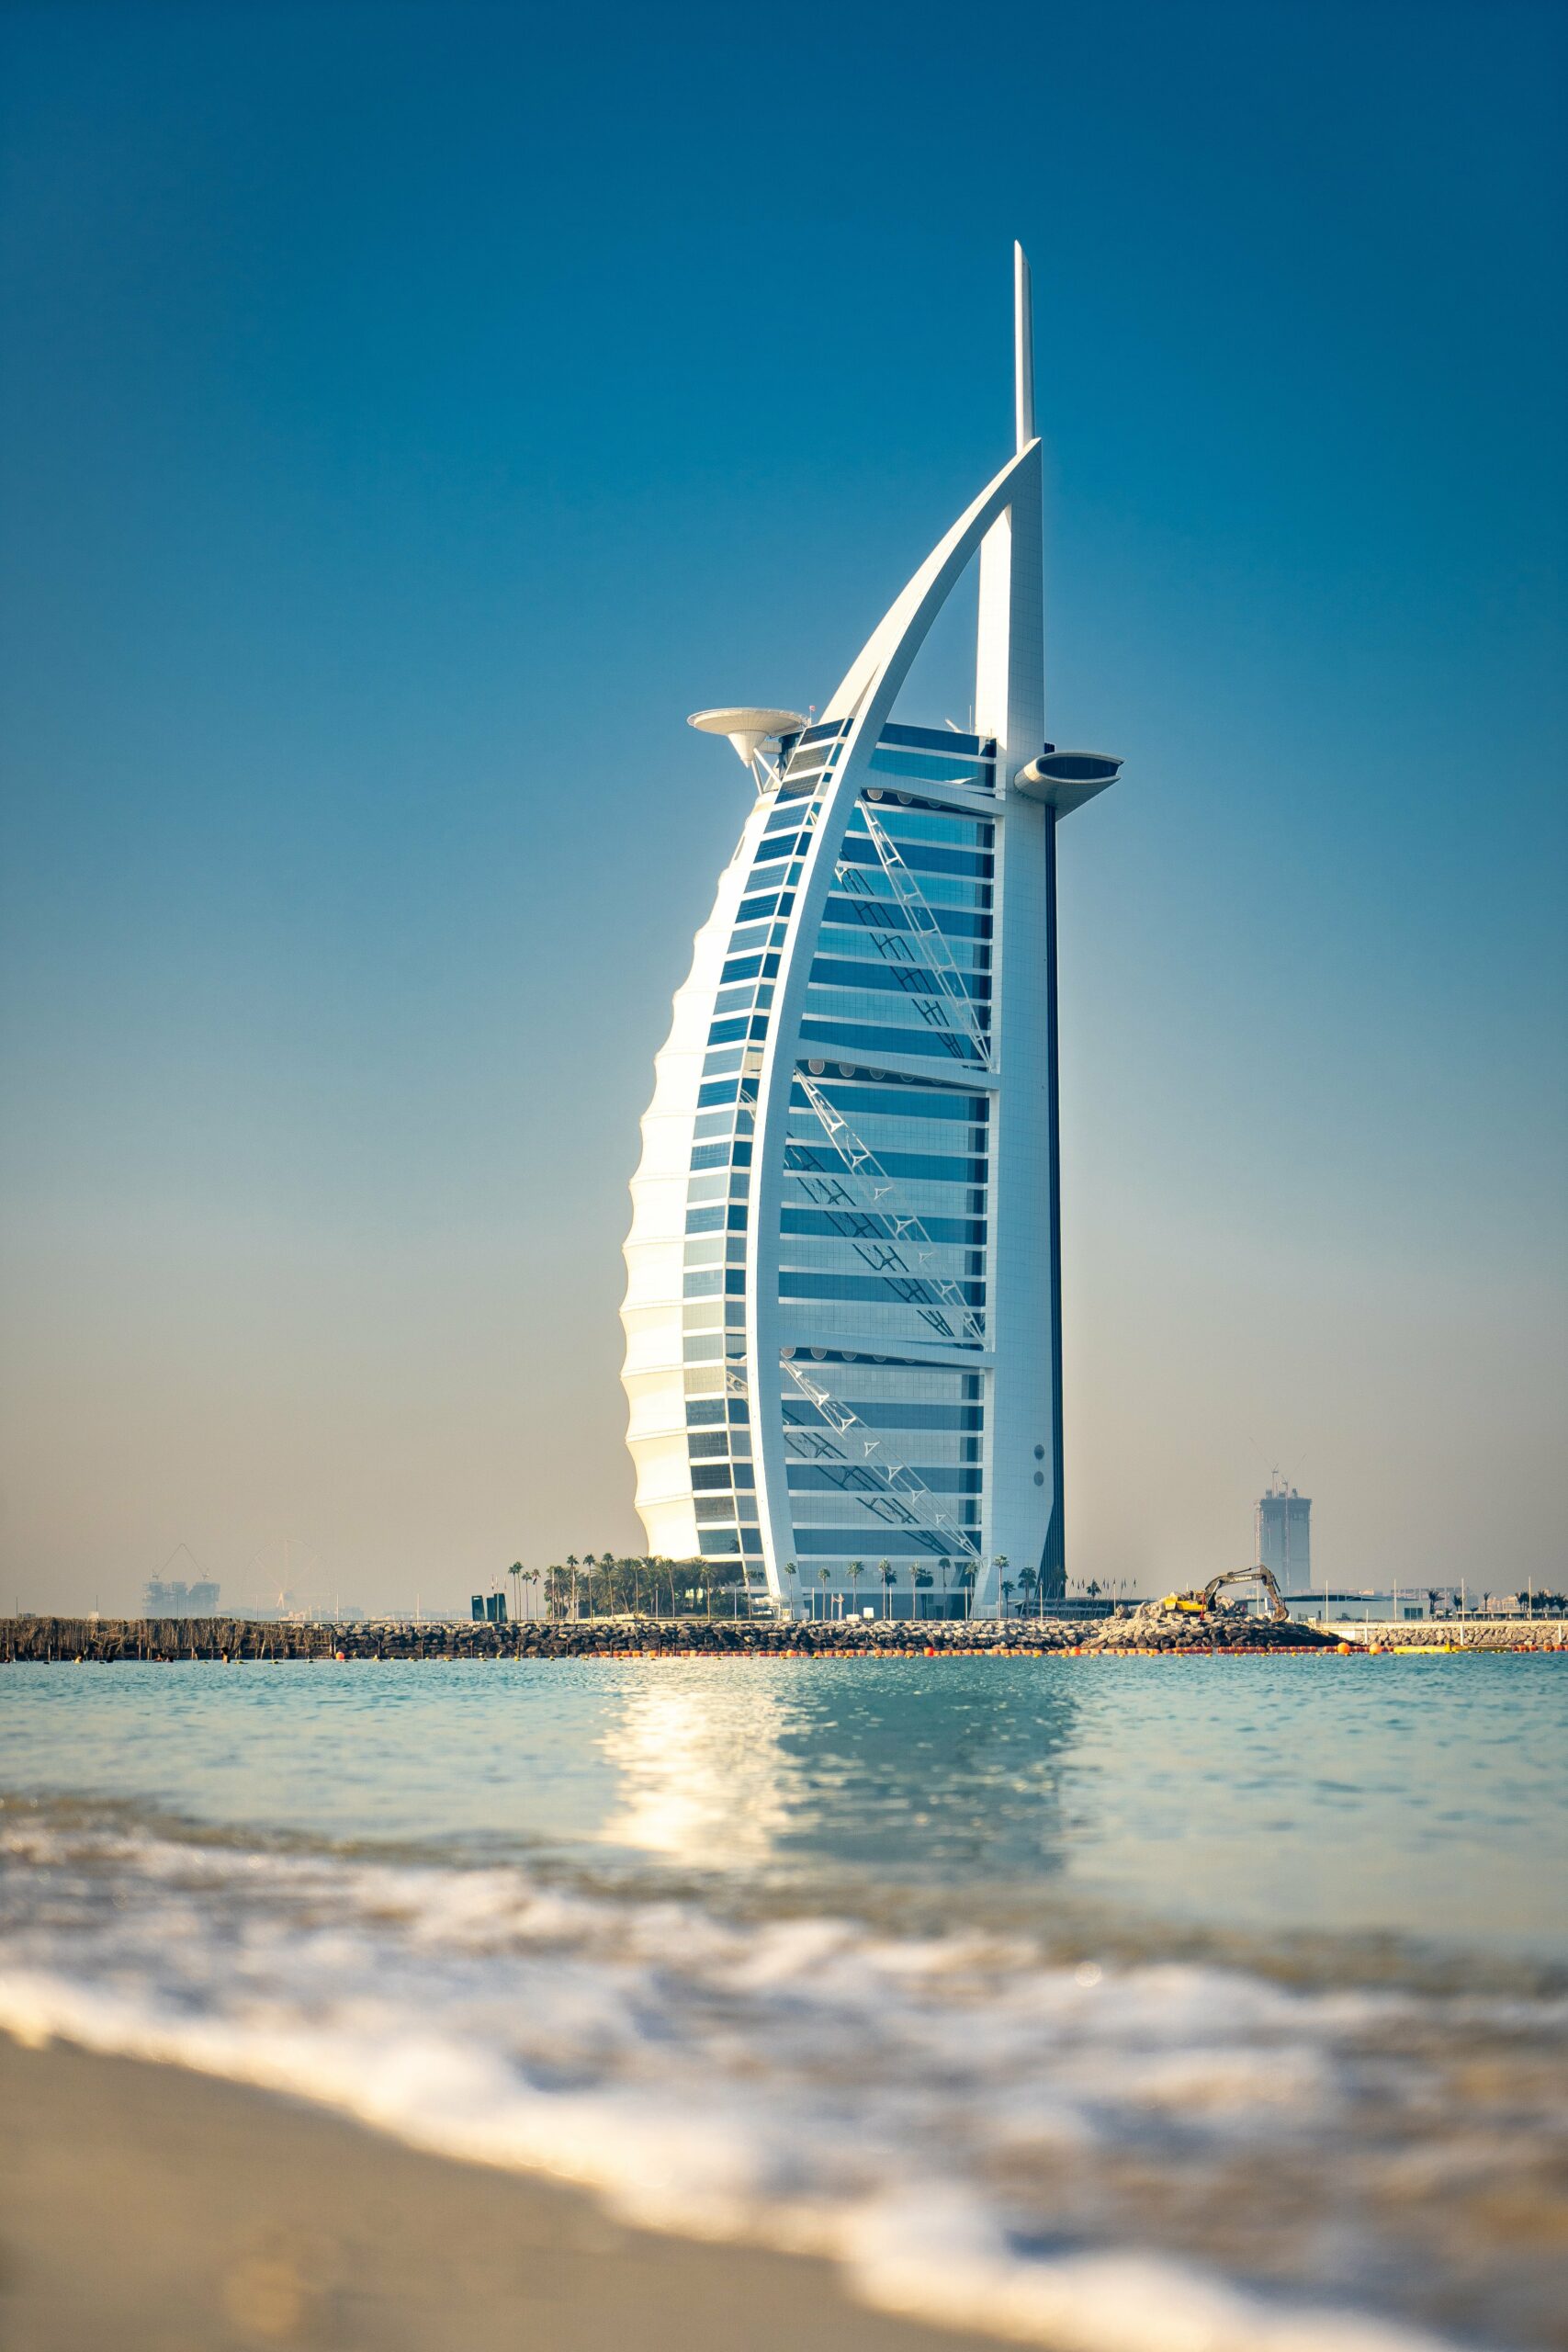 What is the nickname of Dubai?